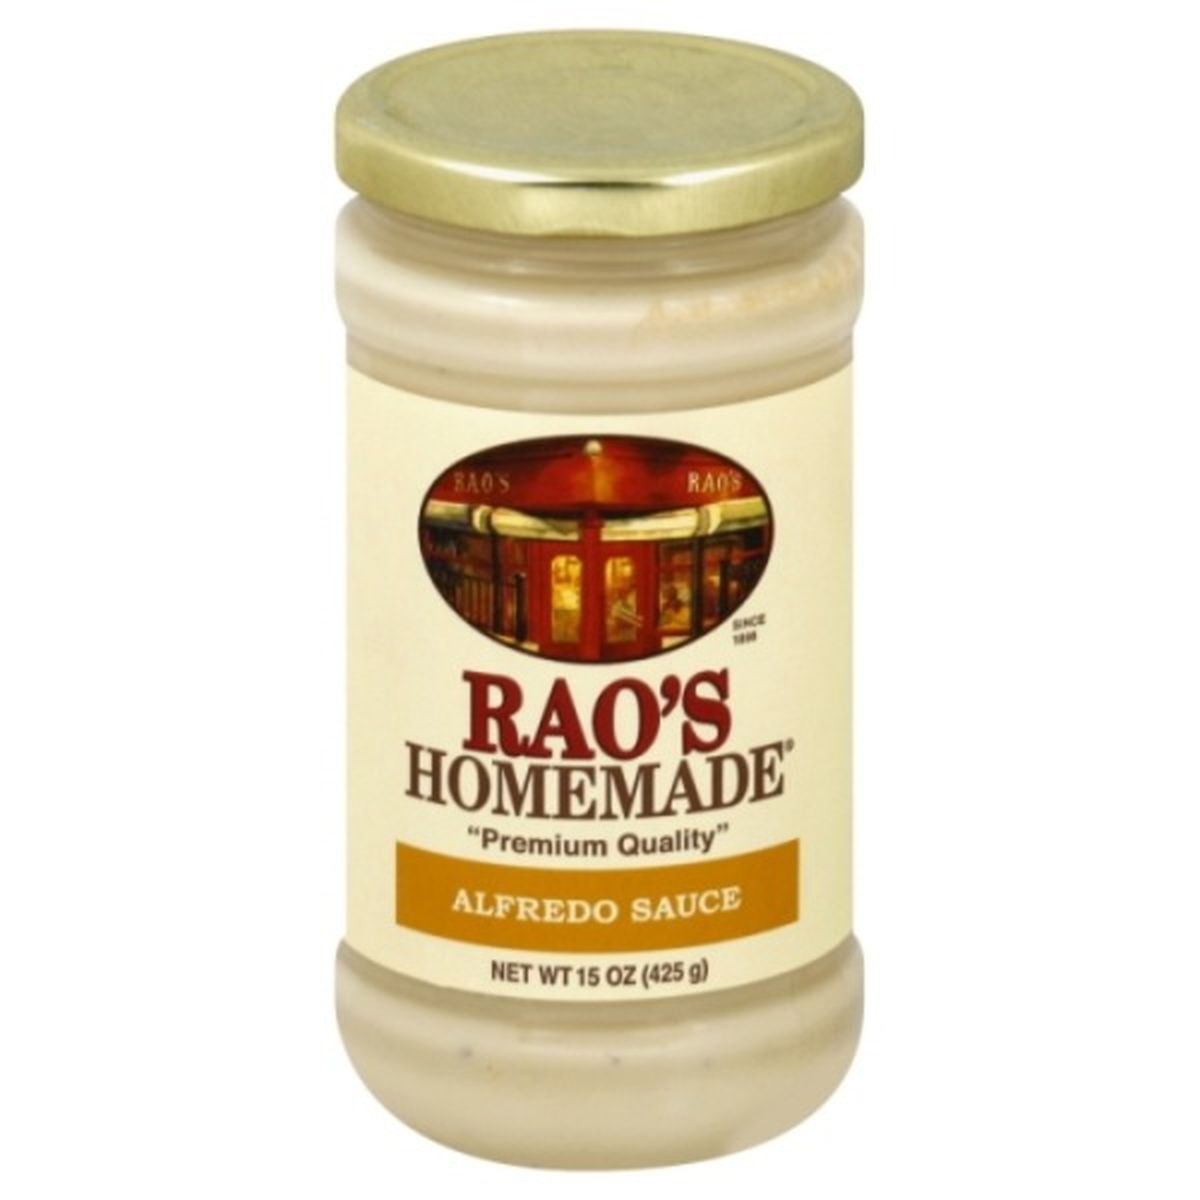 Calories in Rao's Homemade Homemade Alfredo Sauce